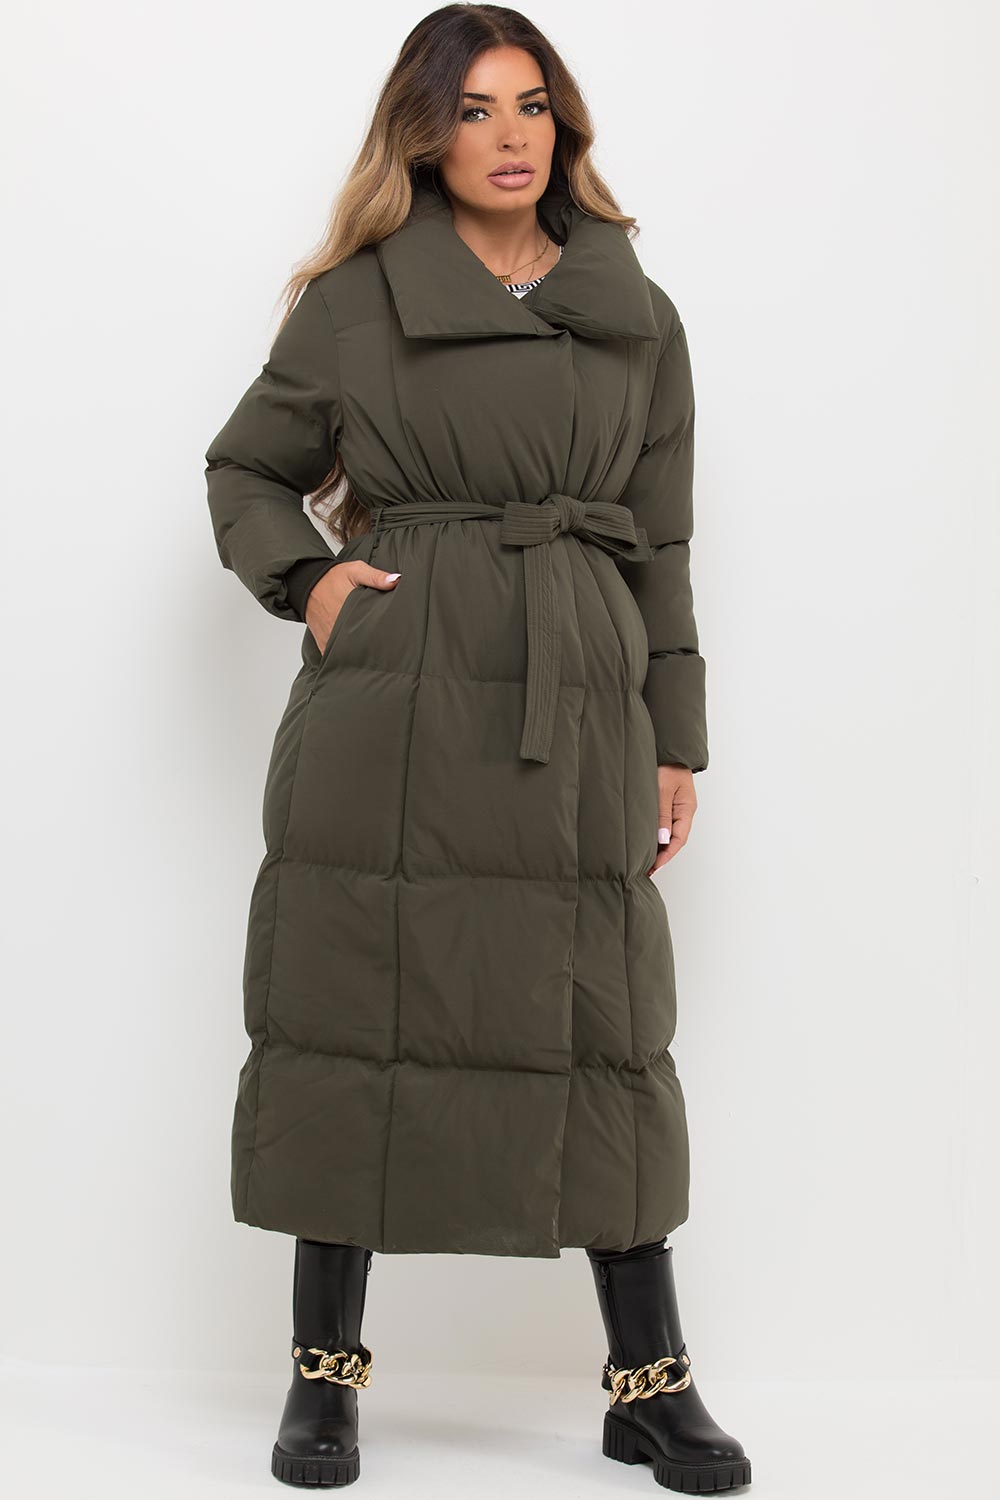 khaki long puffer padded duvet coat womens uk